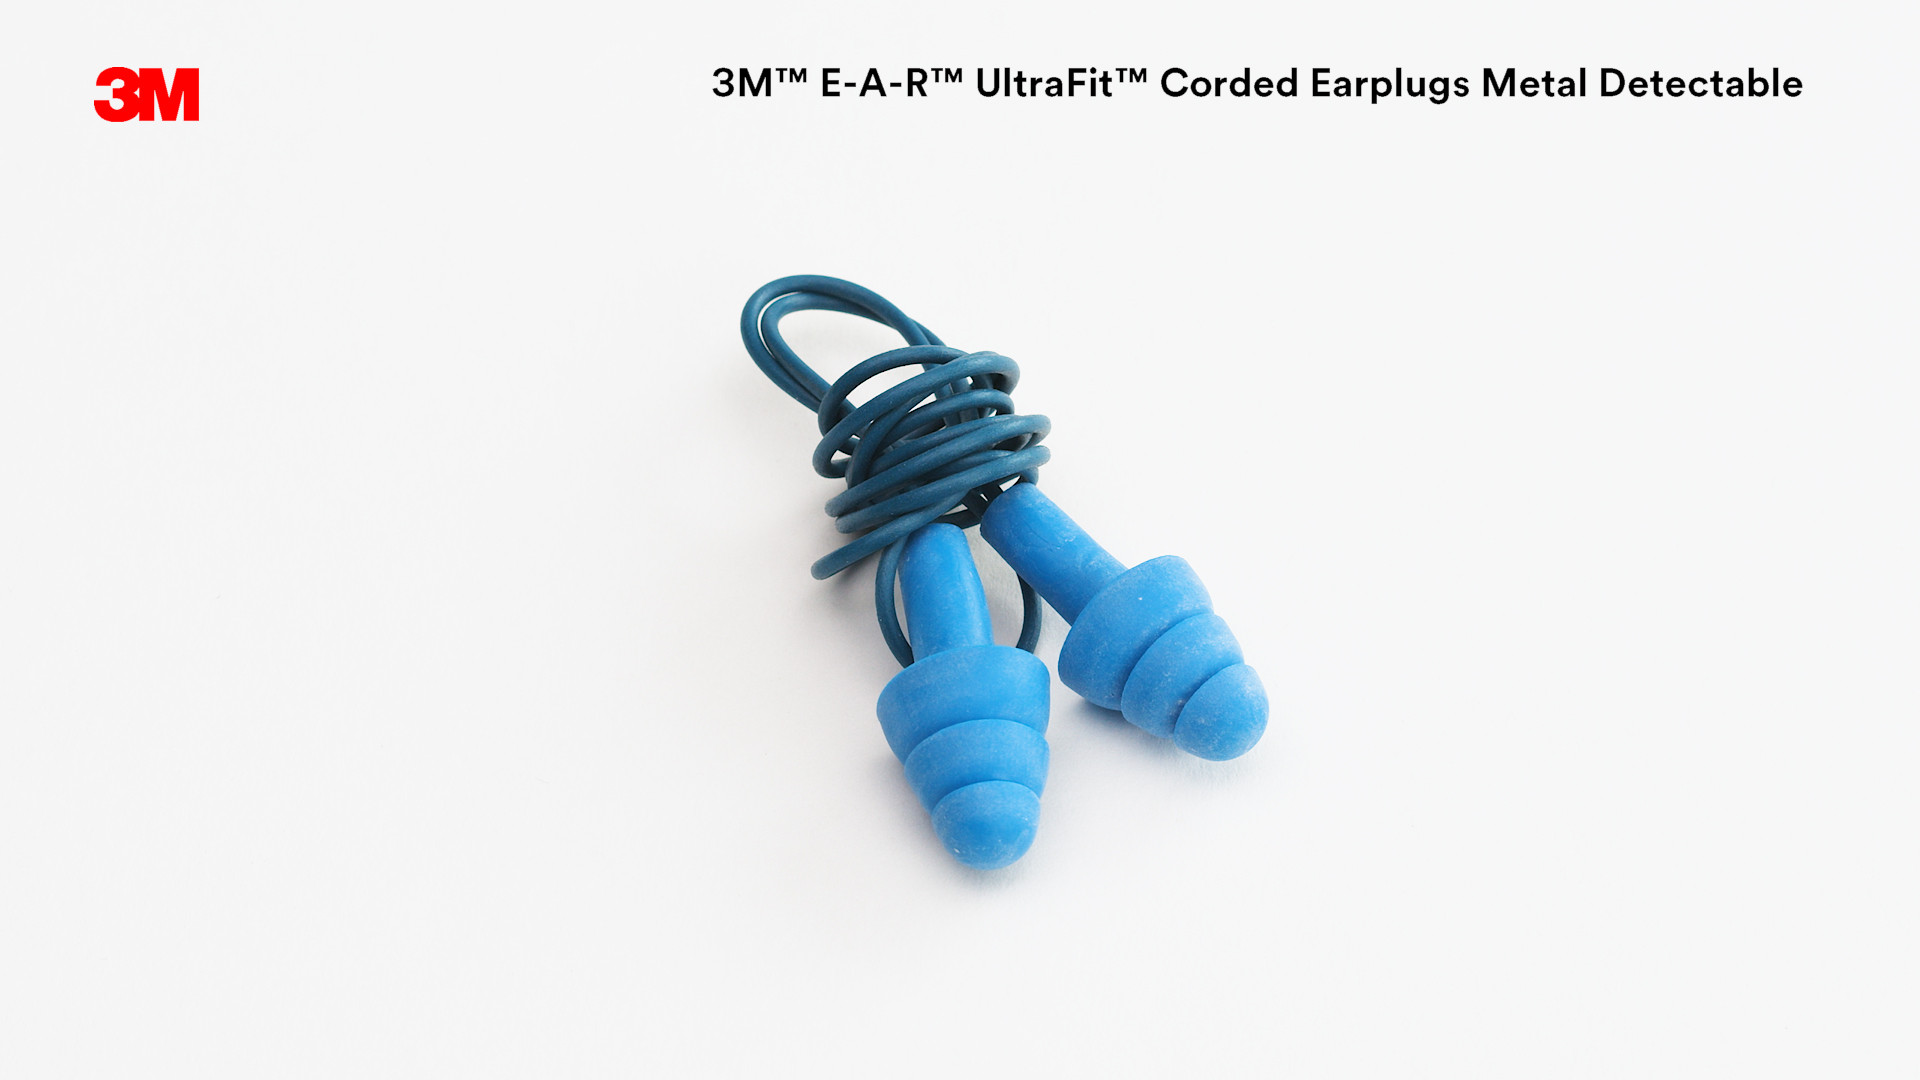 3M™ PELTOR™ Probed Electronic Earplug 393-2032-50, UltraFit Sm, 50 Pair/Case